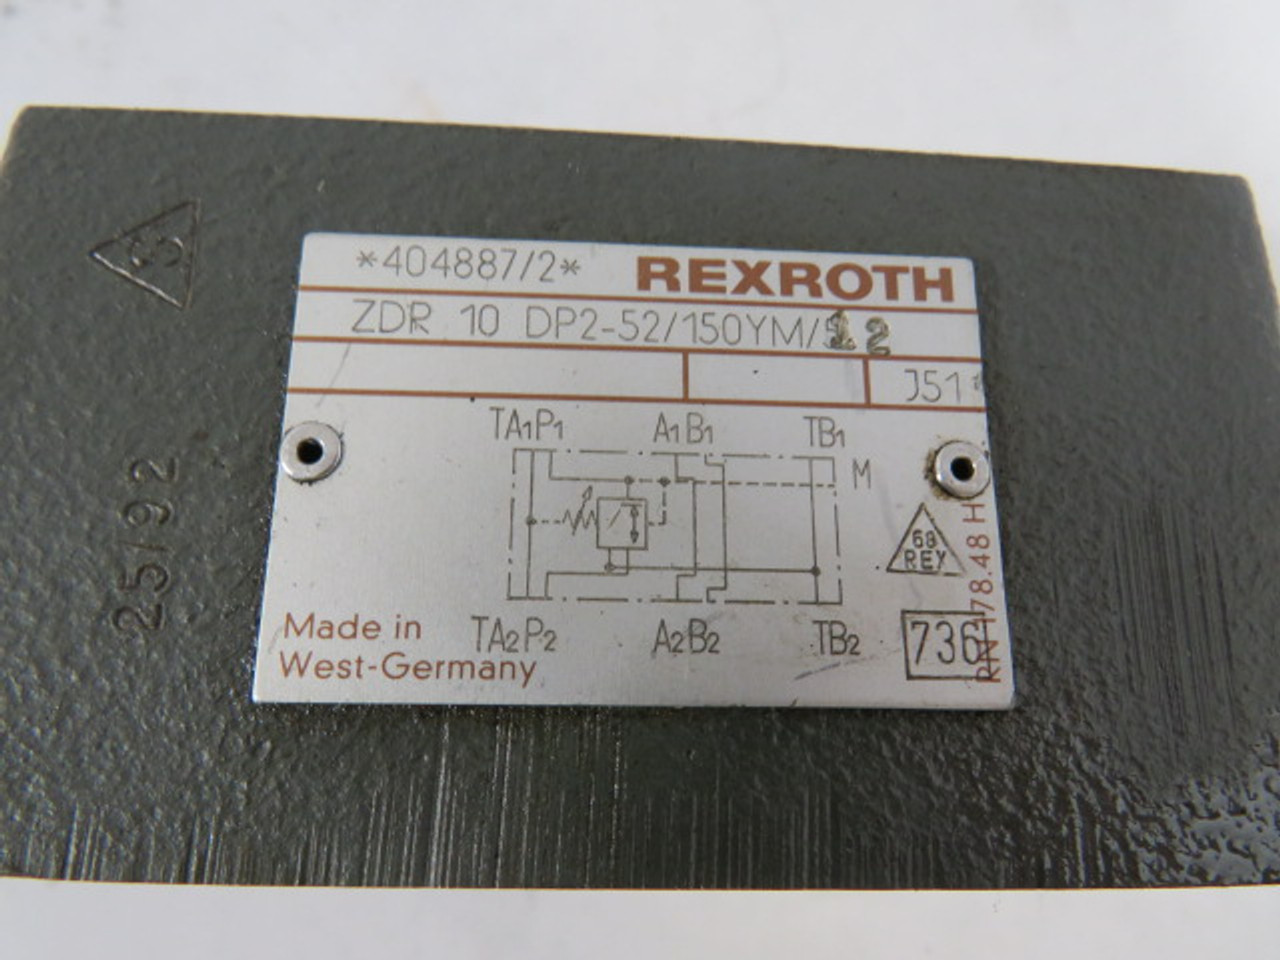 Rexroth 404887/2 ZDR-10-DP2-52/150YM/12 Pressure Reducing Valve 315BAR USED